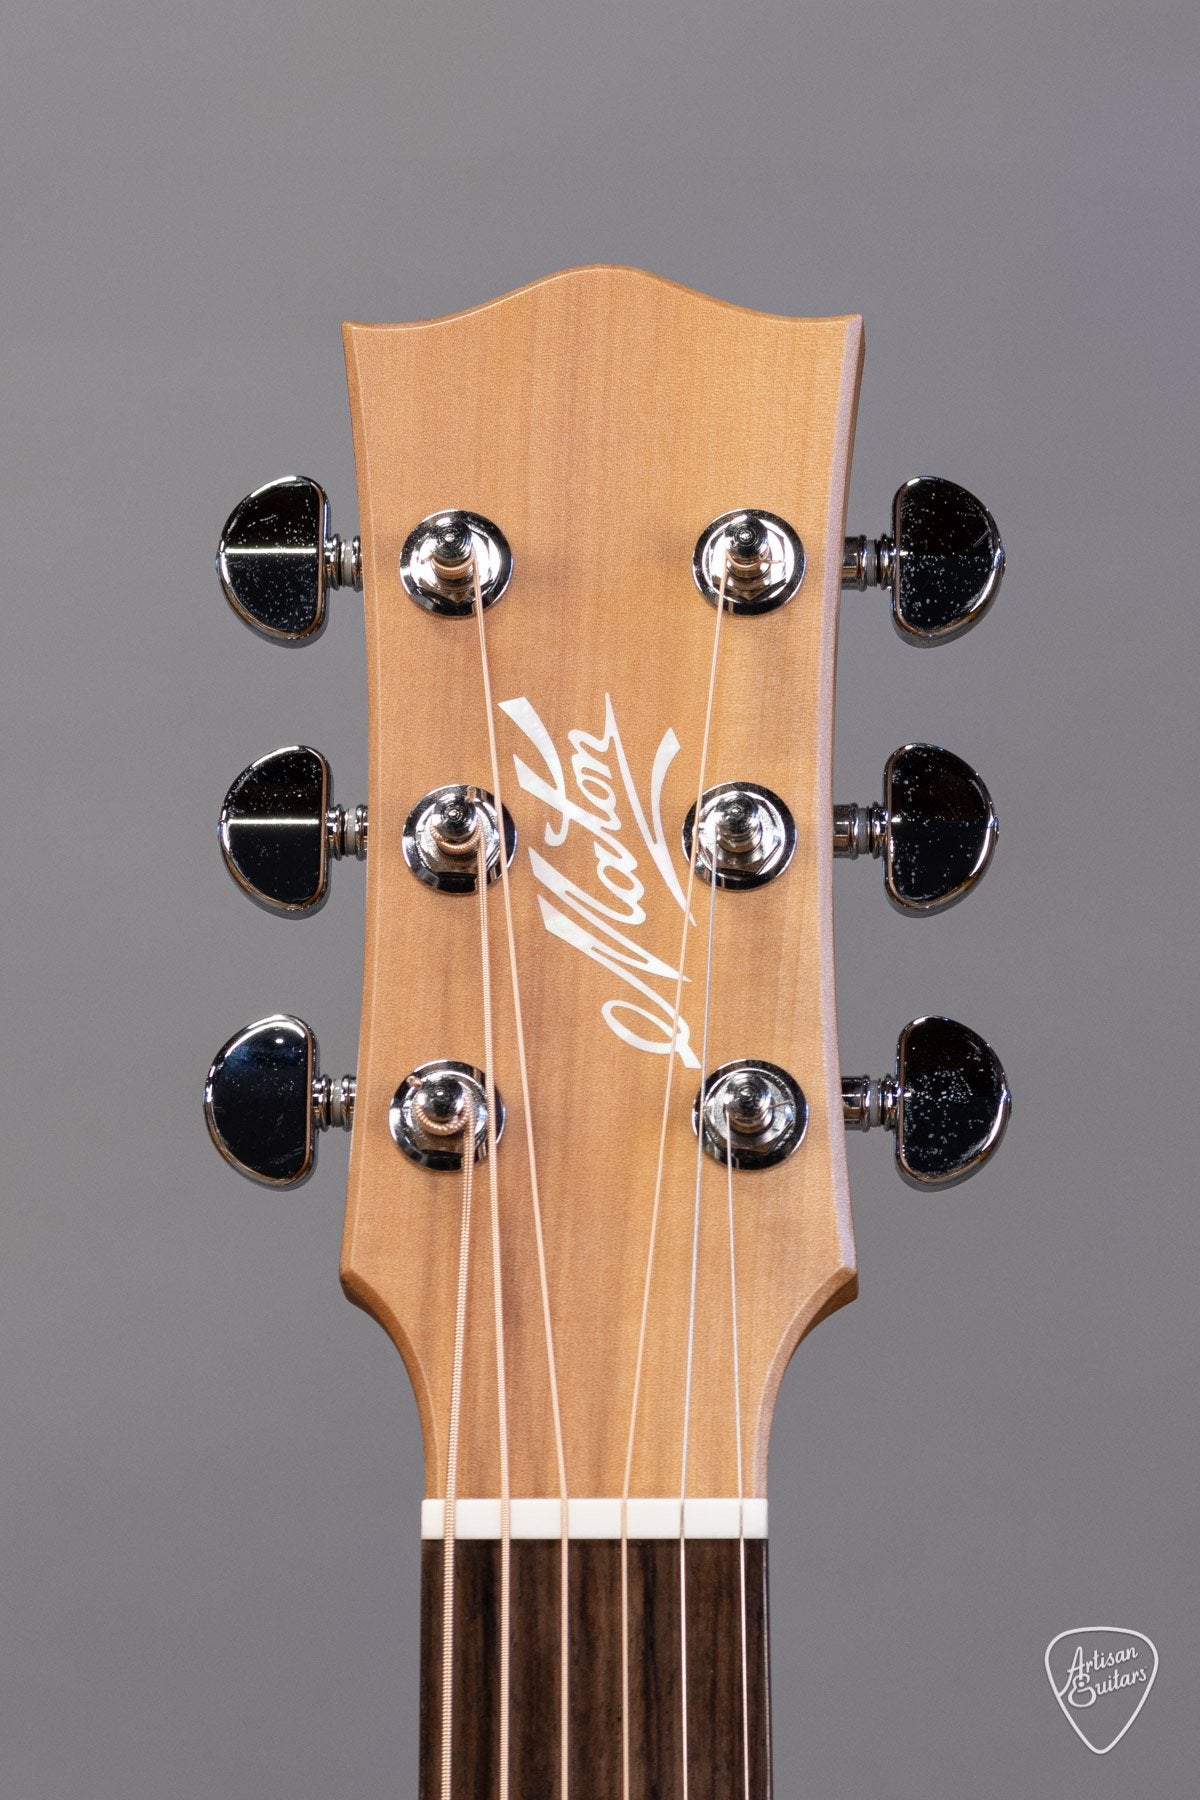 Maton Guitars EBG808C Joe Robinson Signature -15070 - Artisan Guitars